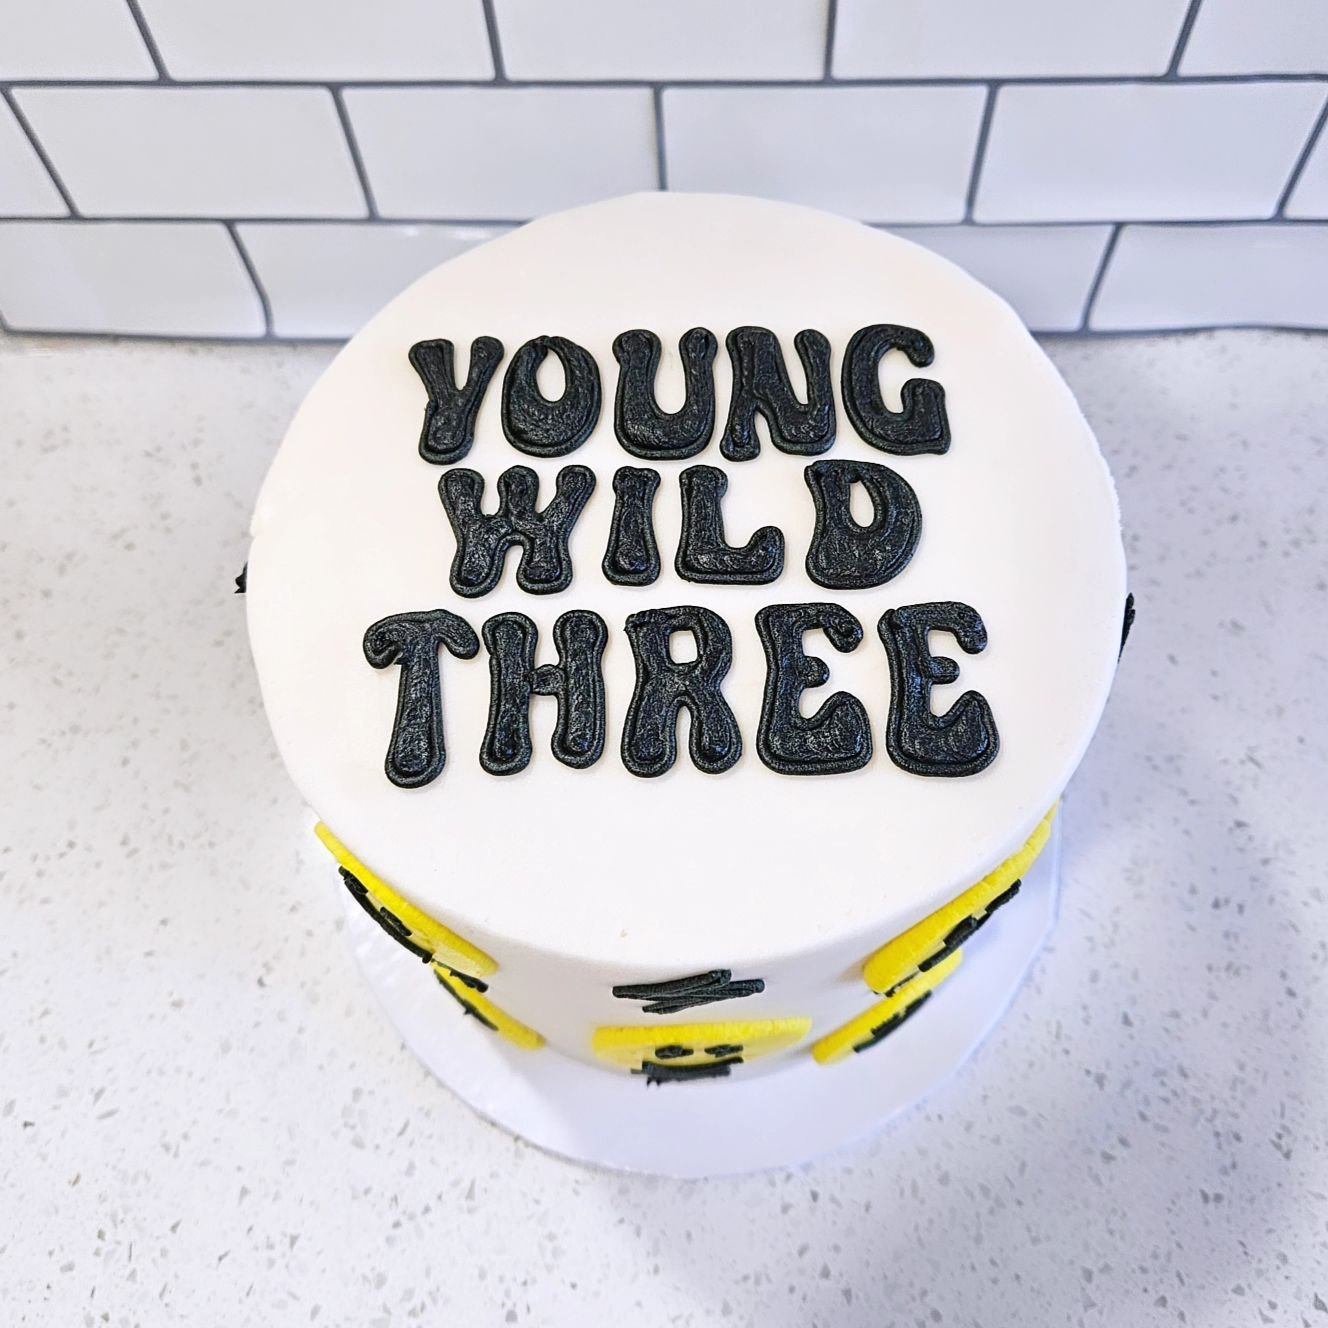 Young Wild and Three 😁 ⚡️
.
.
.
#youngwildandfree #youngwildfree #birthdaycakeideas #smileycake #2024cake #cake #cakedecorating #cakesofinstagram #cakedesign #cakestagram #cakeart #buttercream #buttercreamcake #cakedecorator #cakecakecake #yycliving